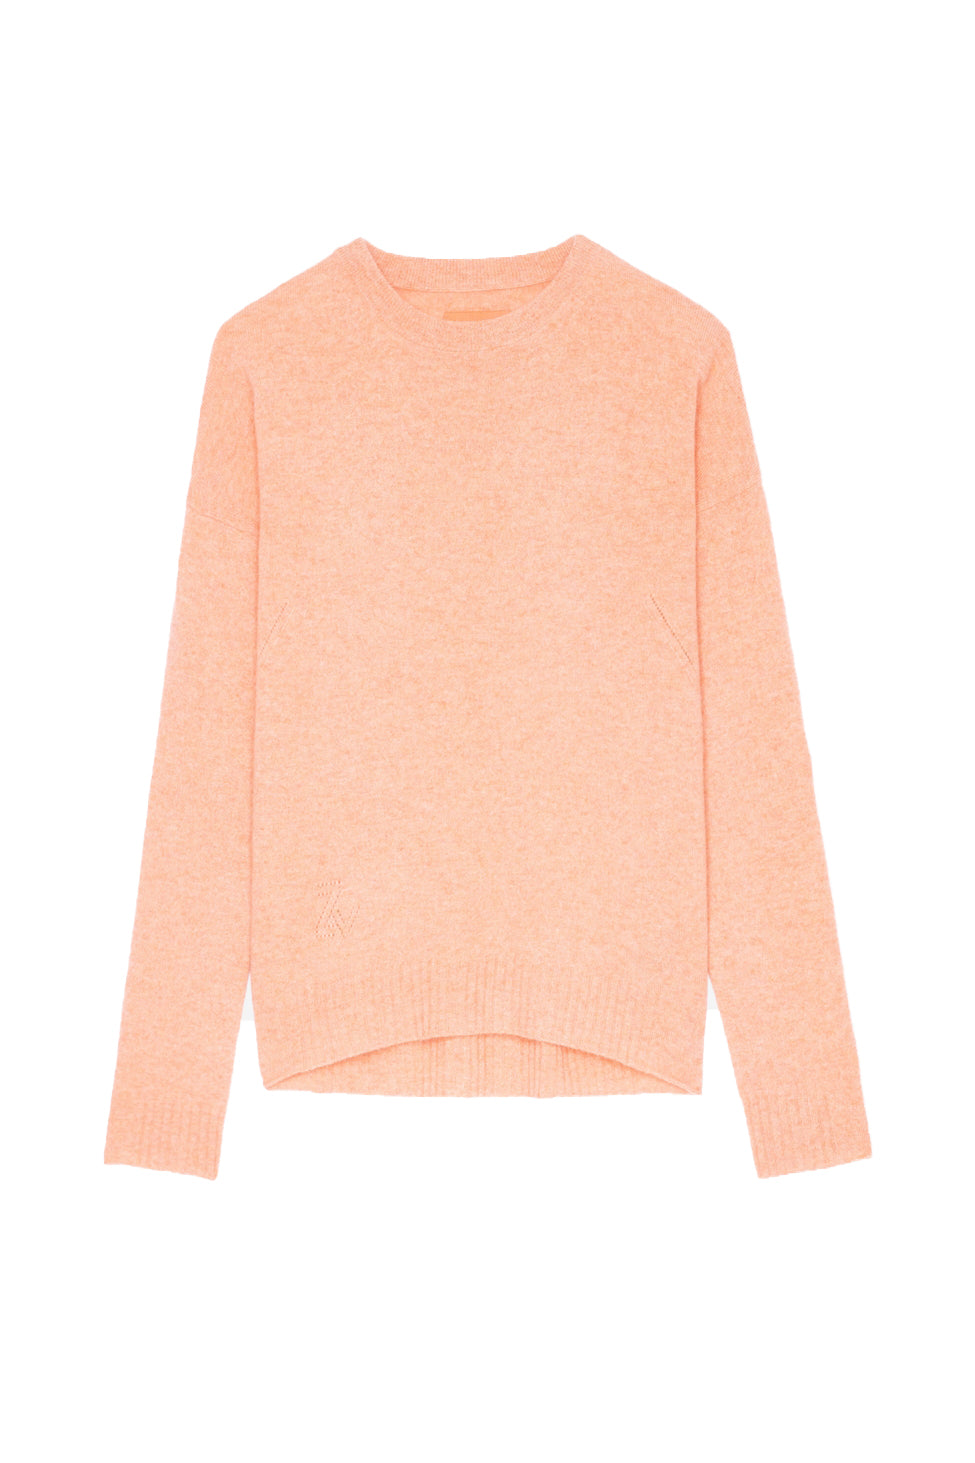 Cici elbow-patch cashmere jumper, light orange